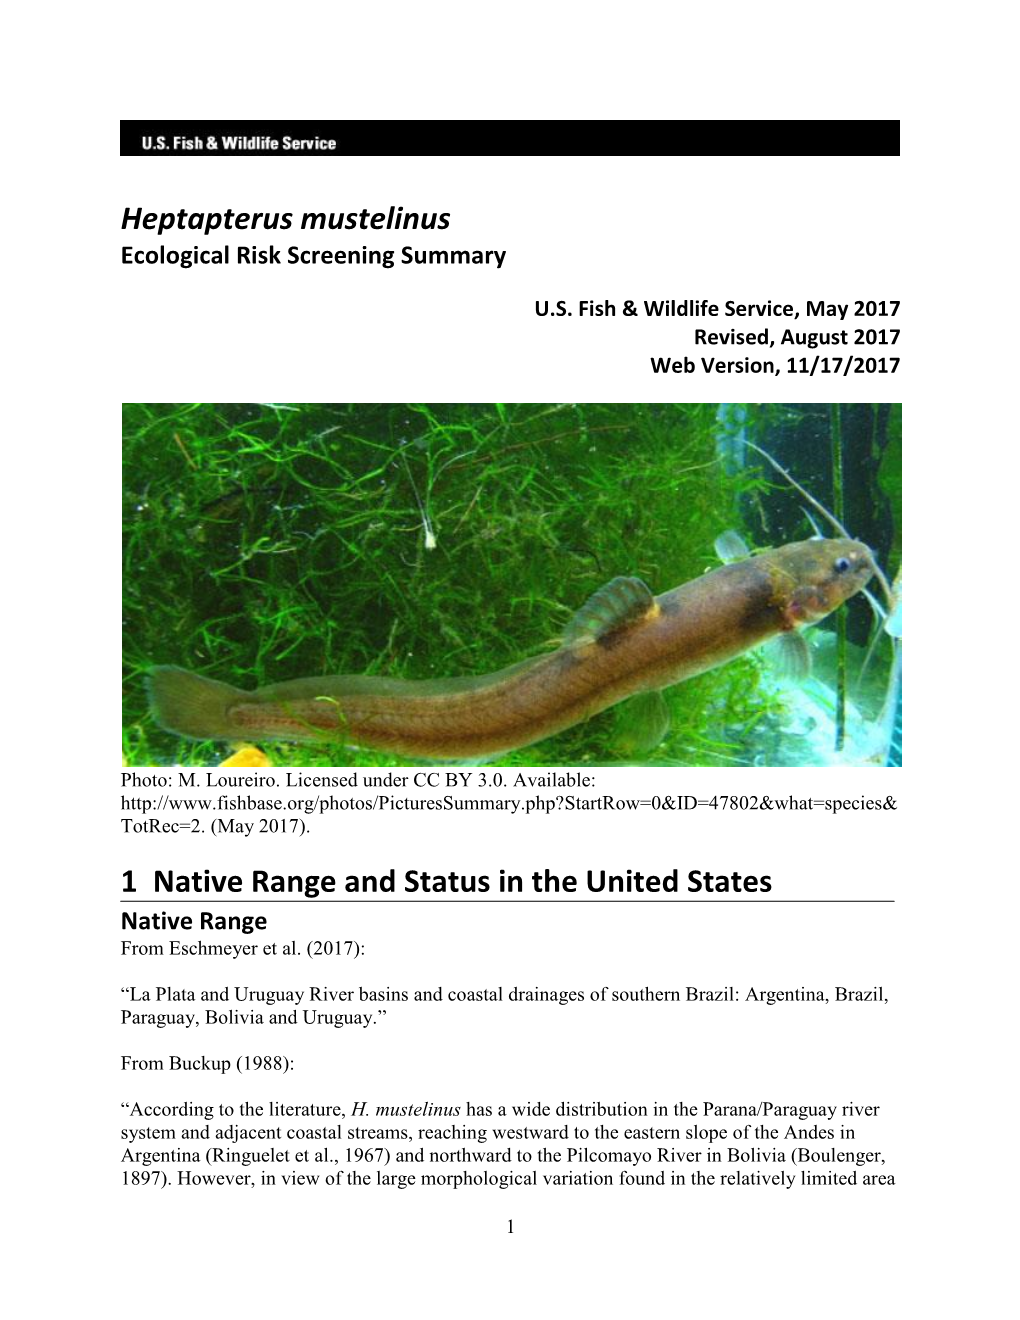 Heptapterus Mustelinus Ecological Risk Screening Summary